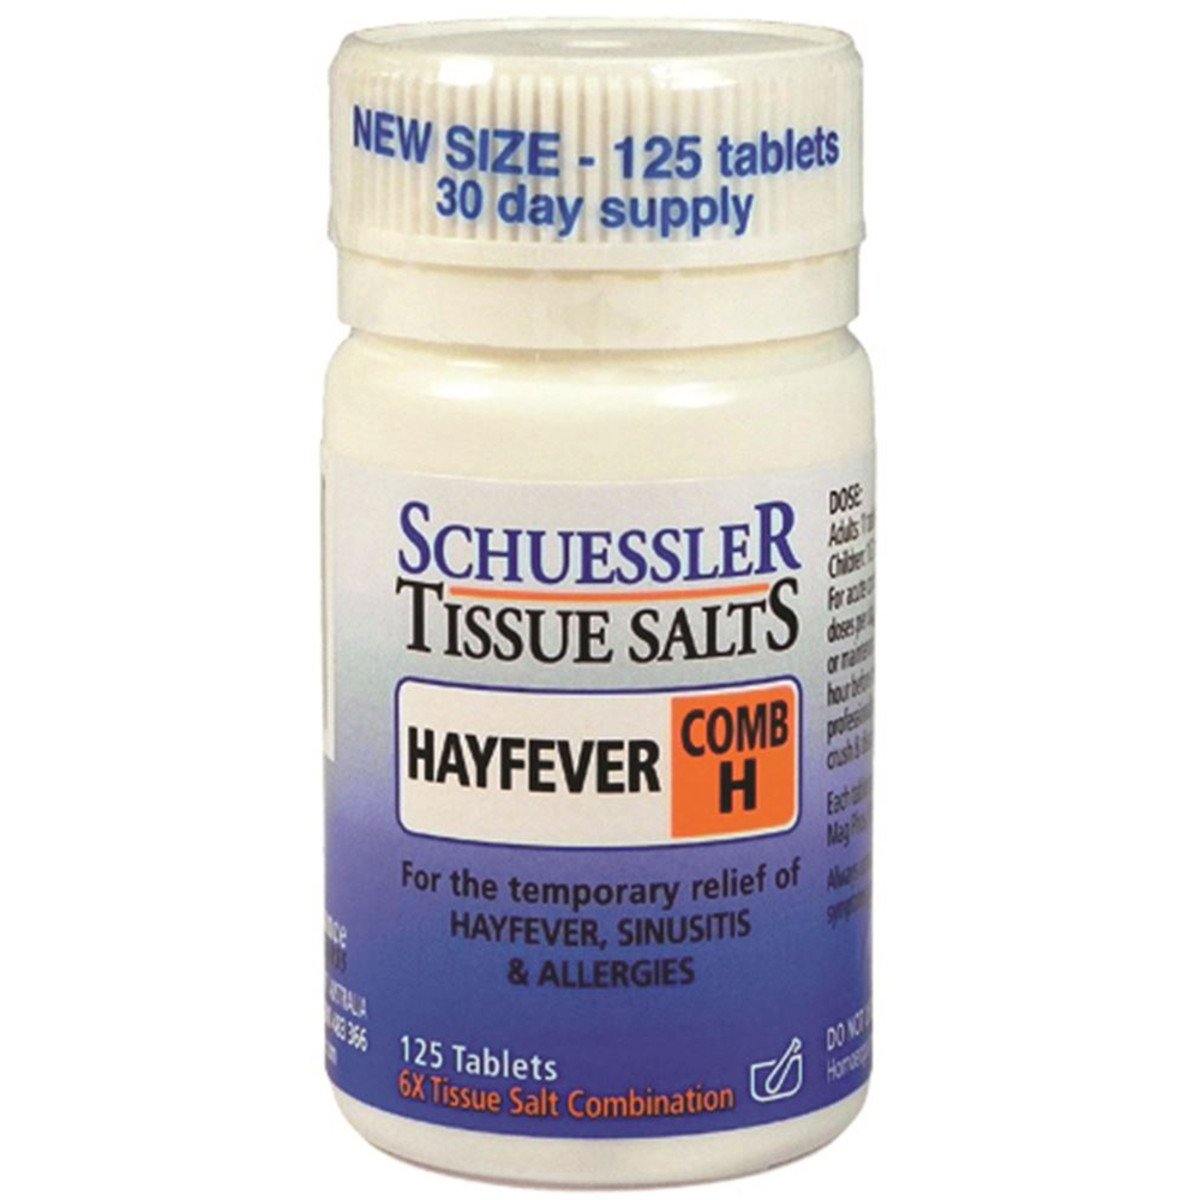 Martin & Pleasance Schuessler Tissue Salts Comb H (Hayfever) 125 Tablets - QVM Vitamins™